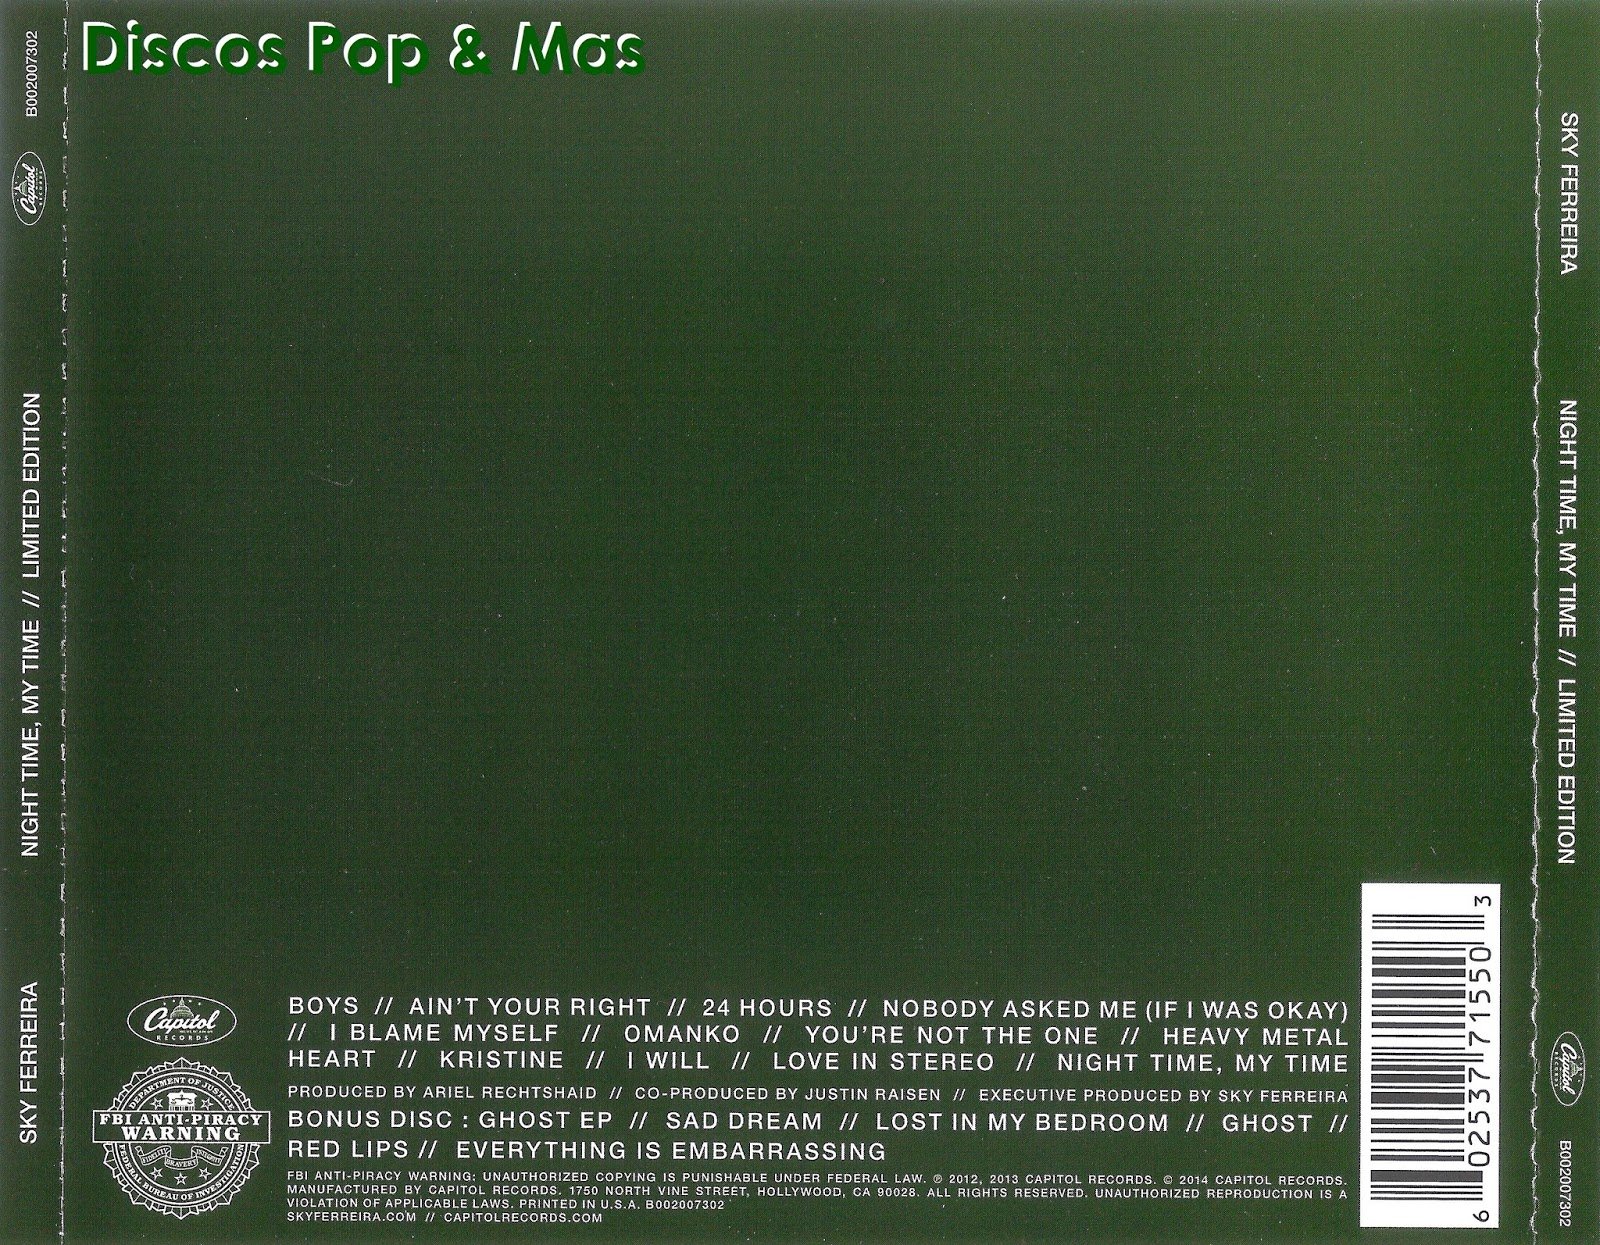 Discos Pop & Mas: Sky Ferreira - Night Time, My Time (Limited Edition)